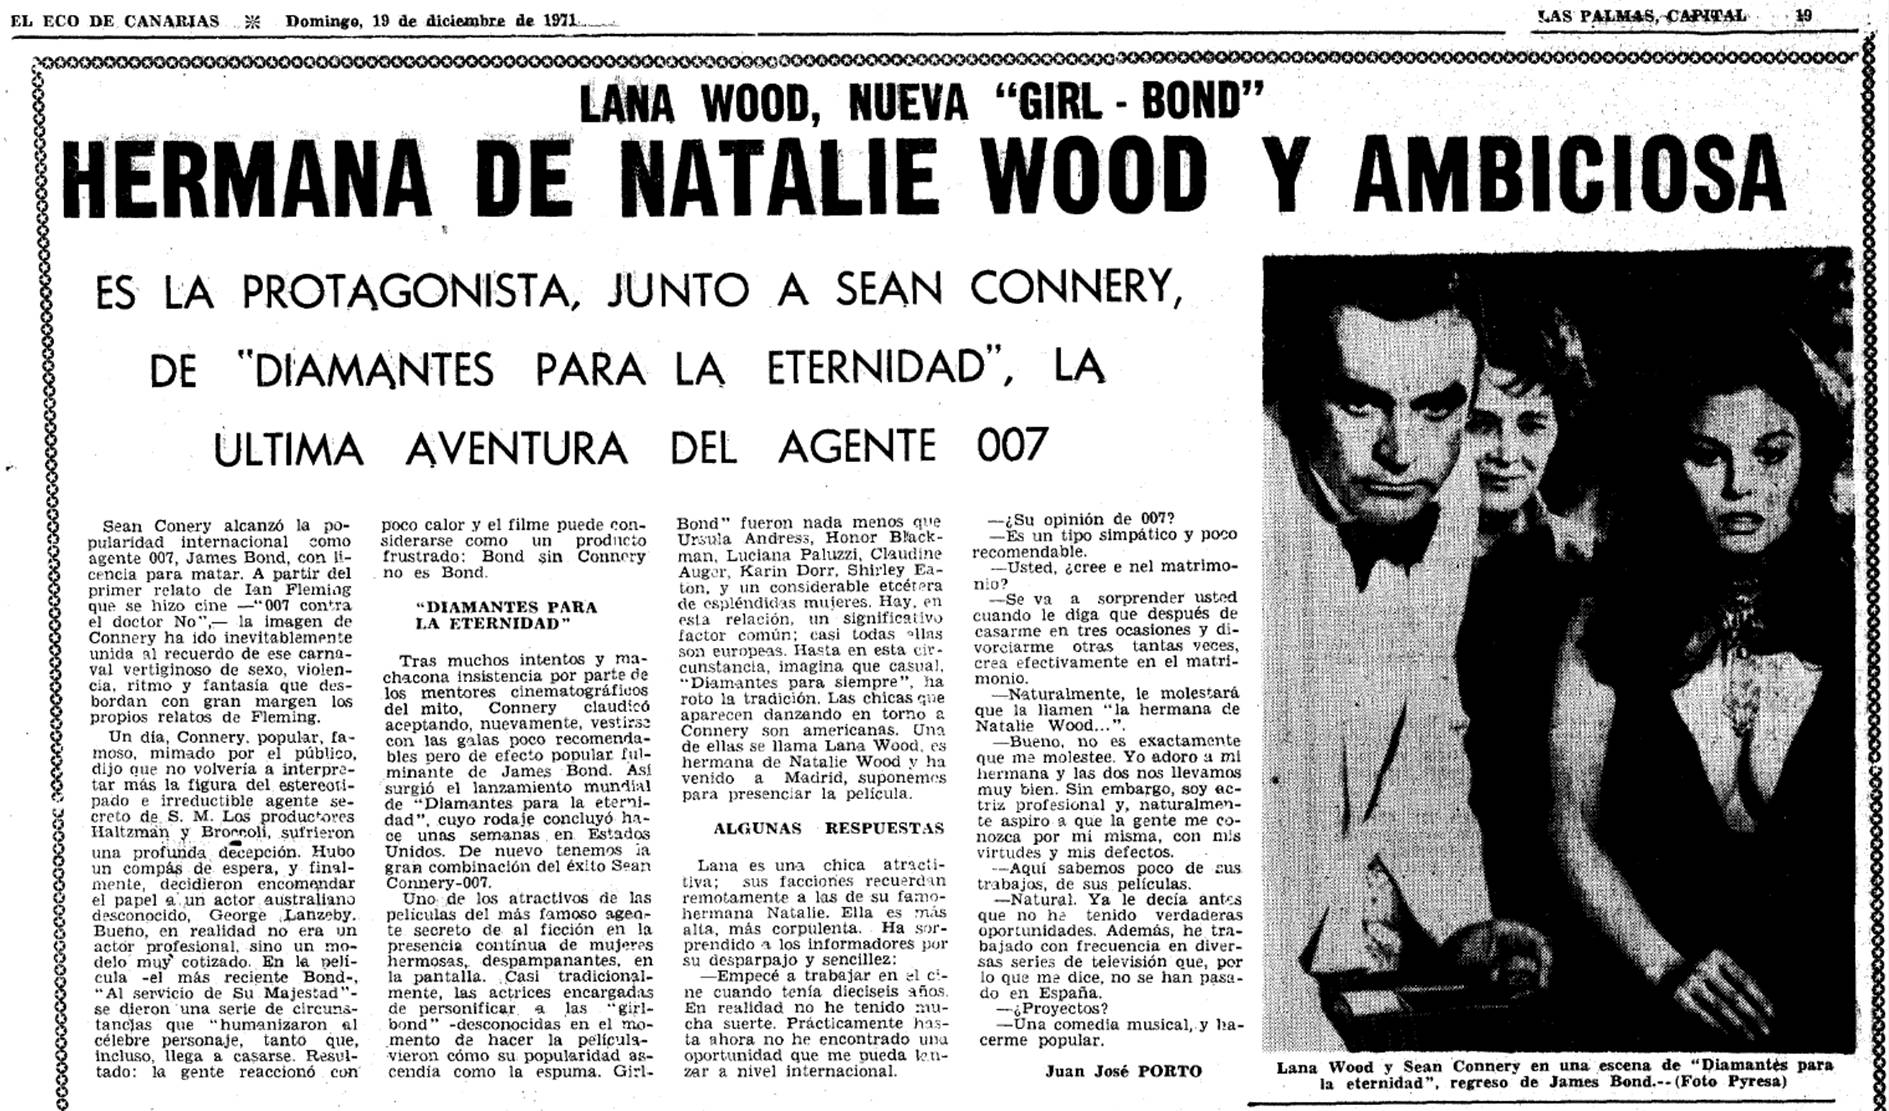 07 1971 12 19 Eco de Canarias Lana Wood